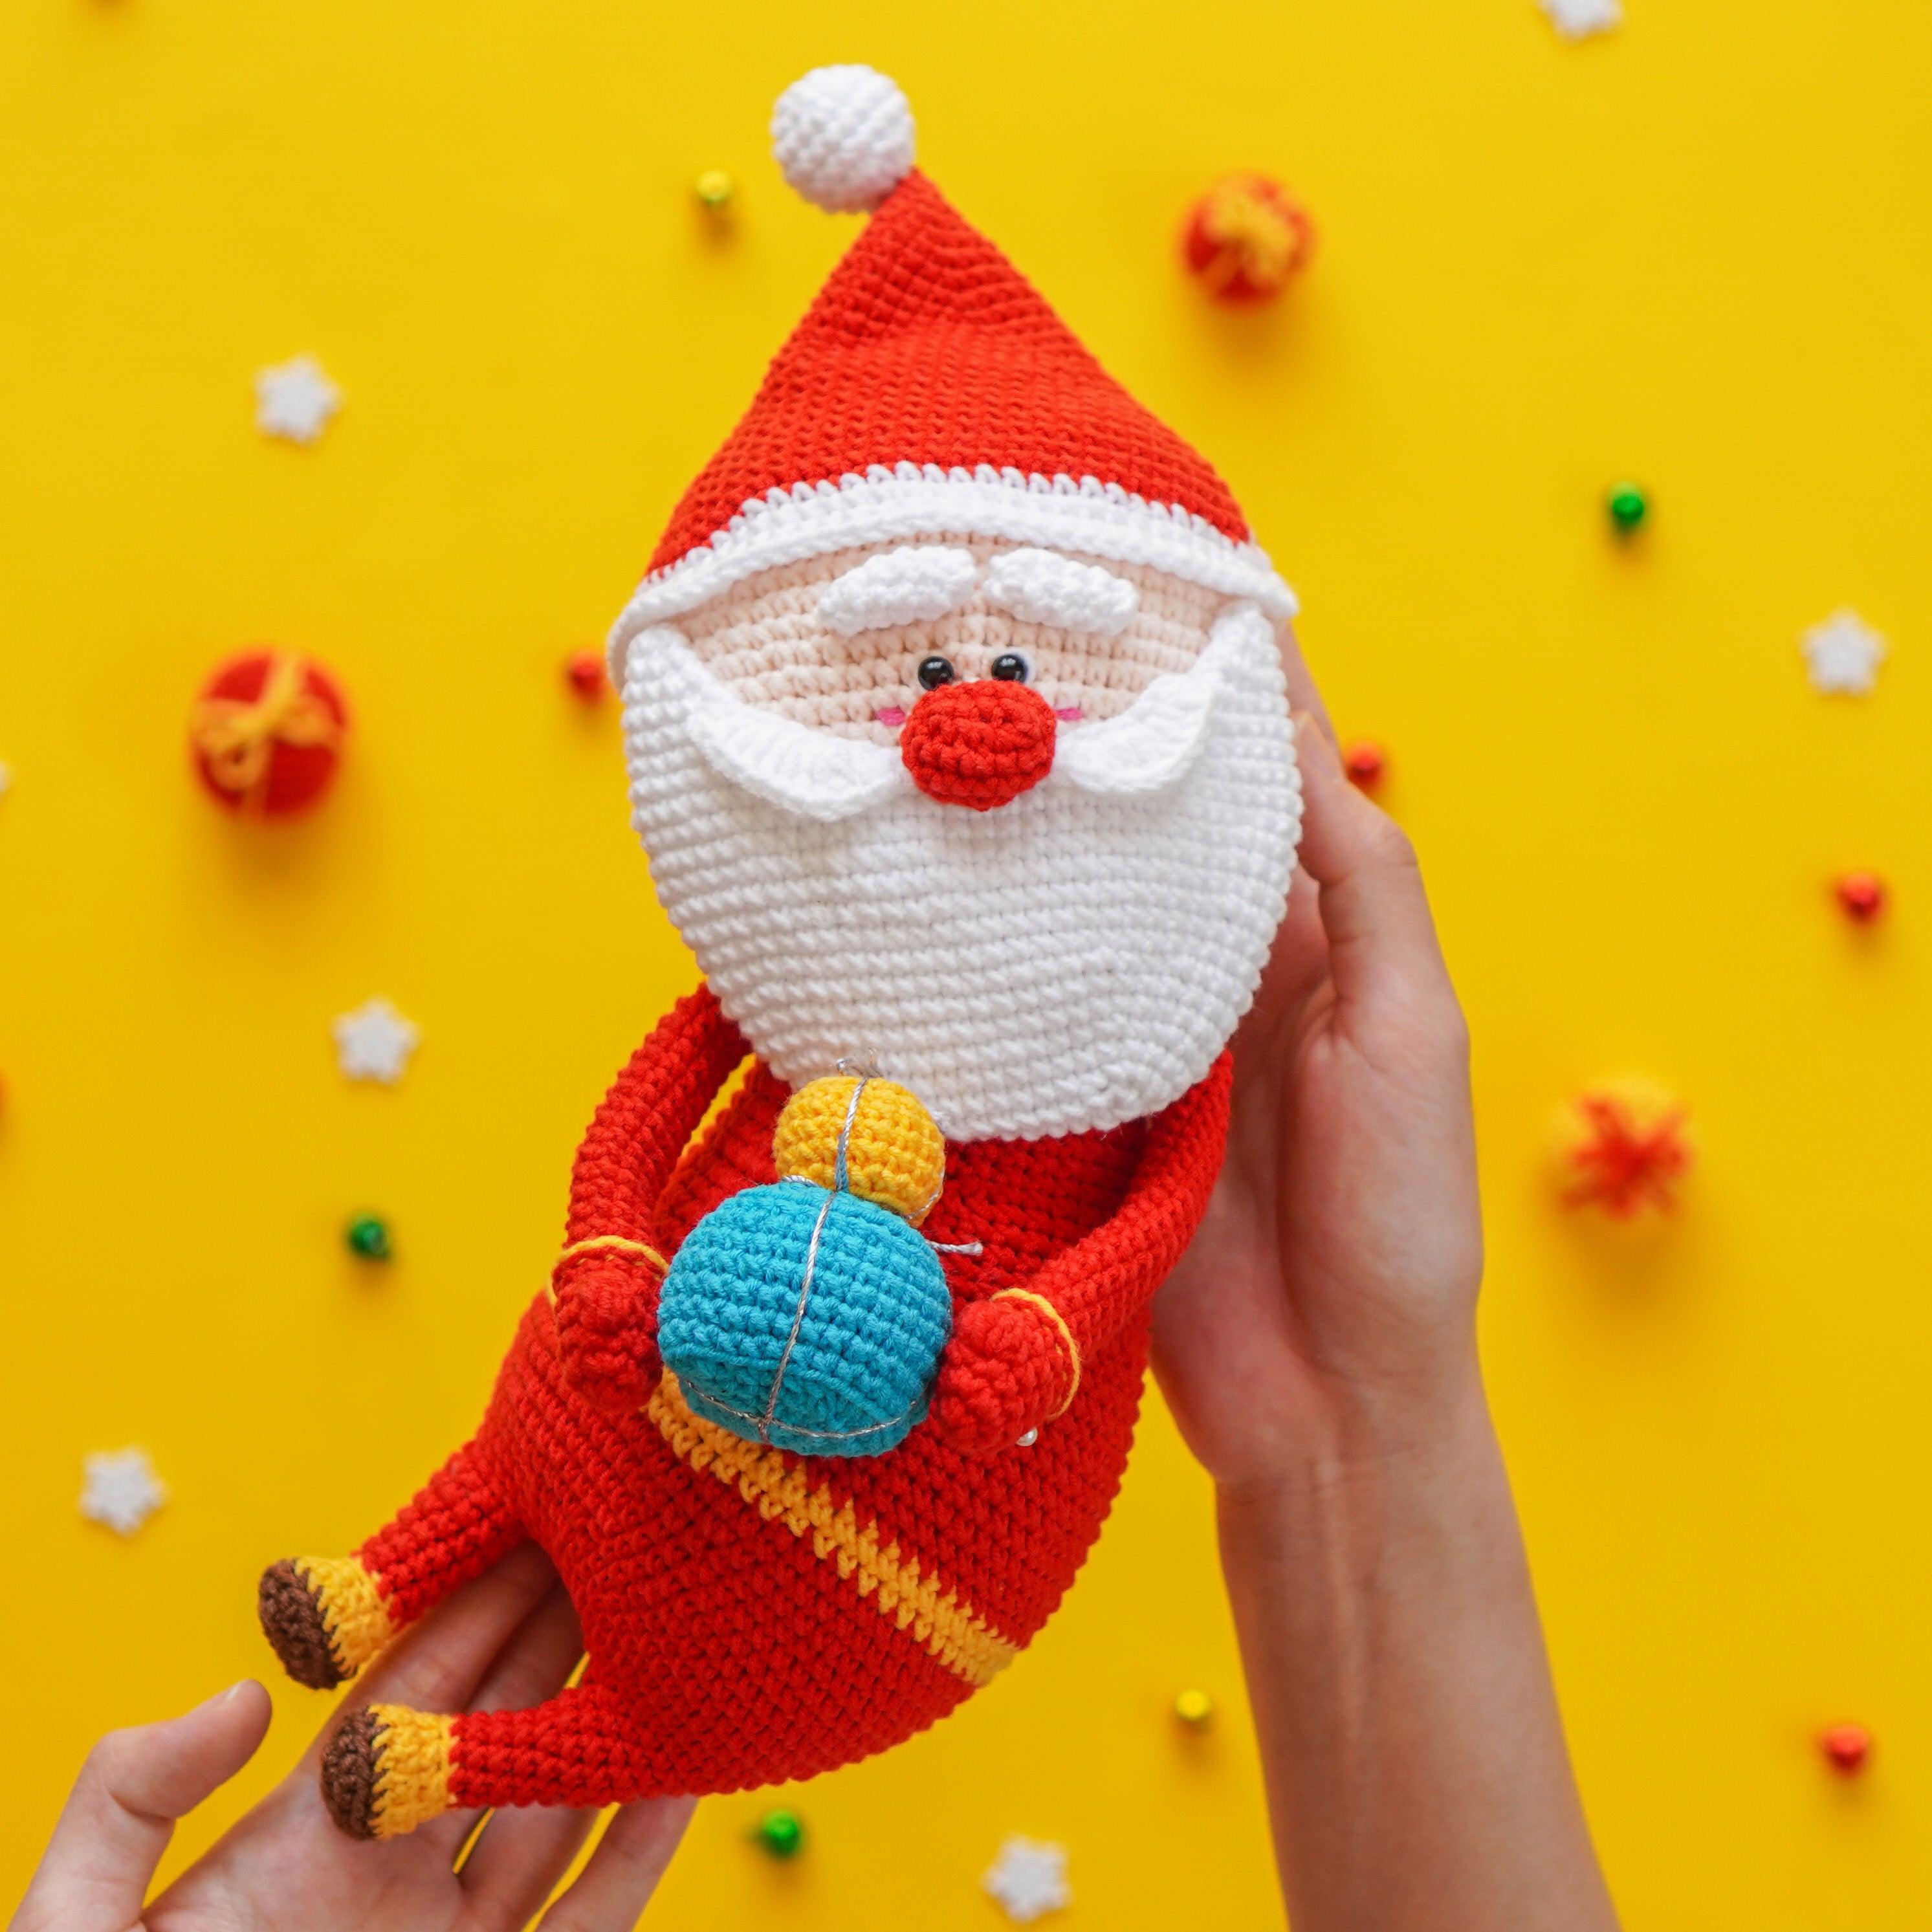 The Christmas Santa Crochet Pattern by Aquariwool (Crochet Doll Pattern/Amigurumi Pattern for Baby gift)